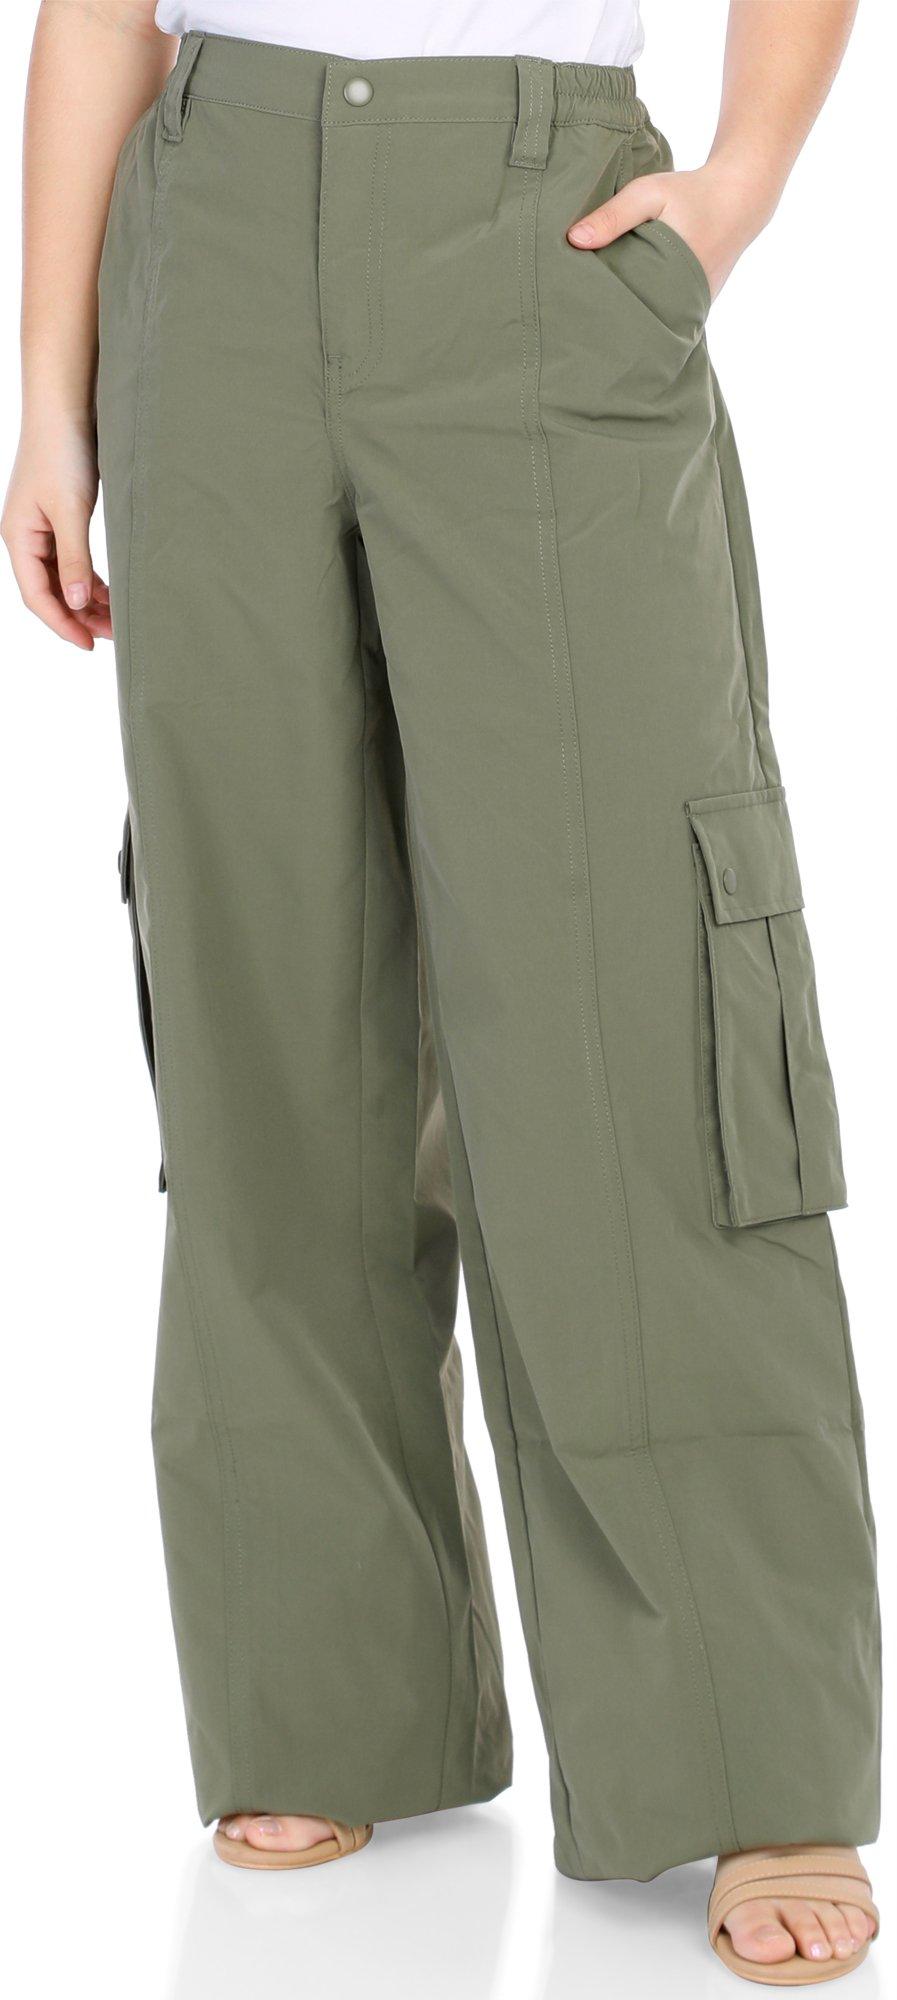 Juniors Solid 2 Pocket Cargo Pants